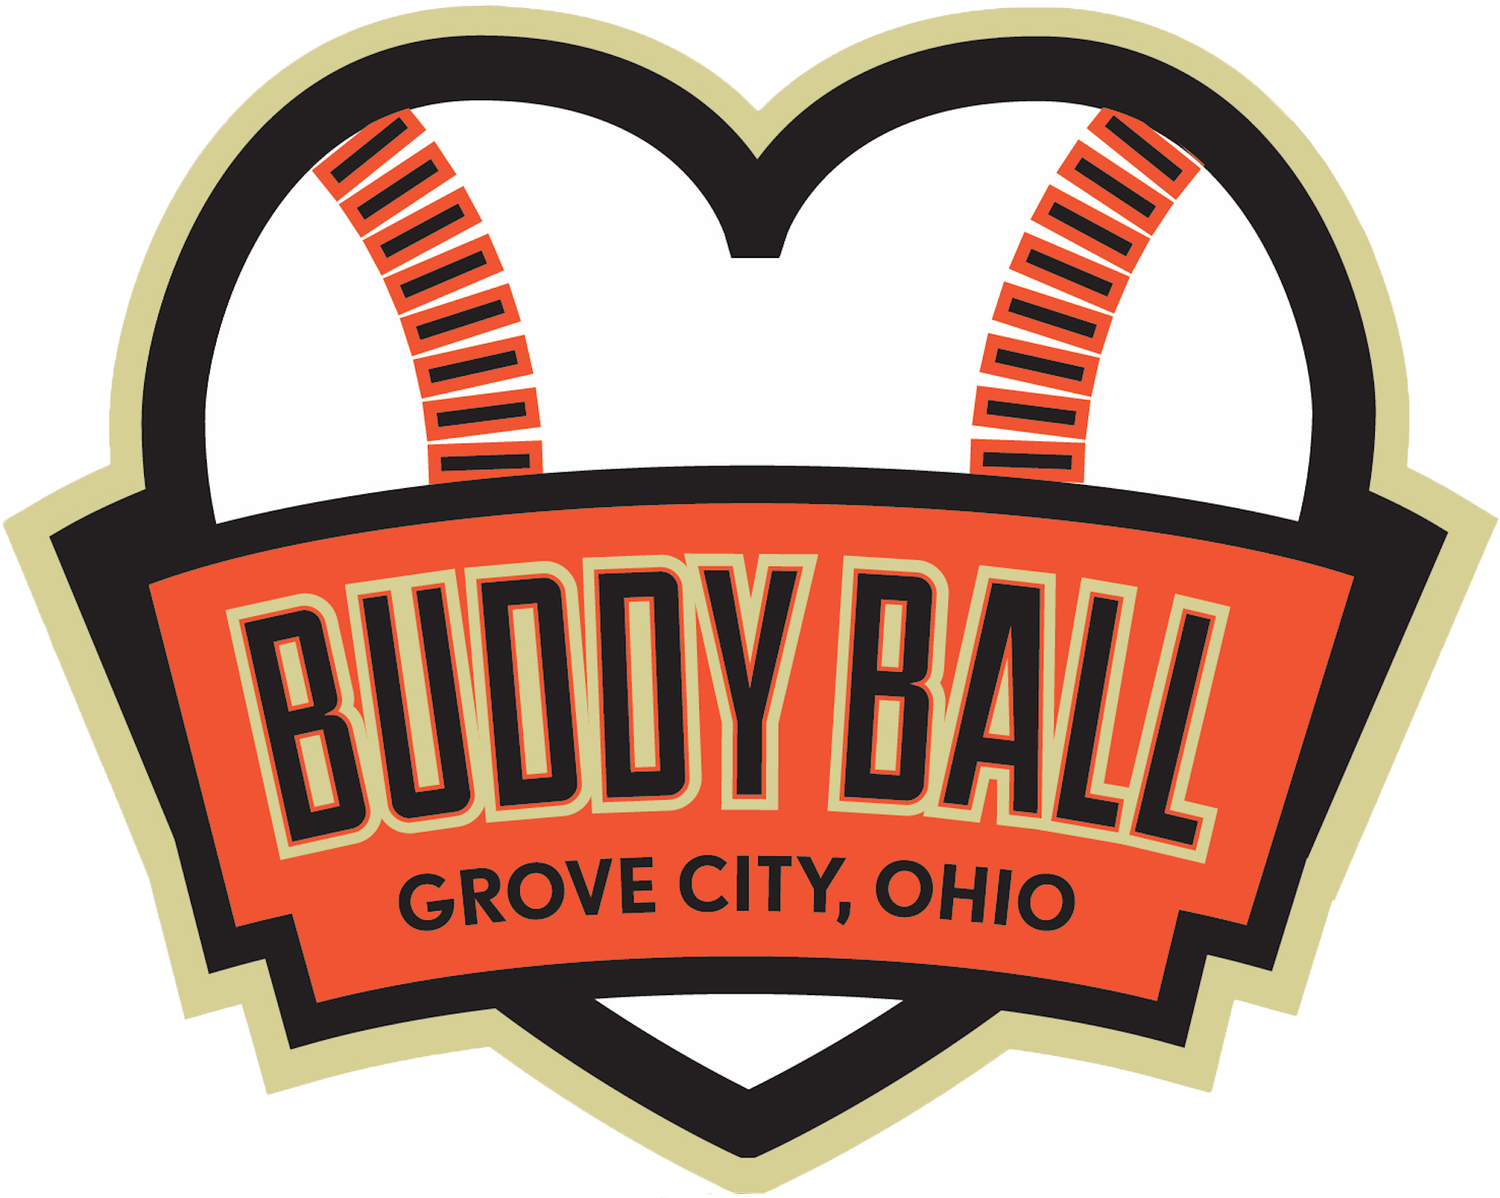 Grove City Buddy Ball